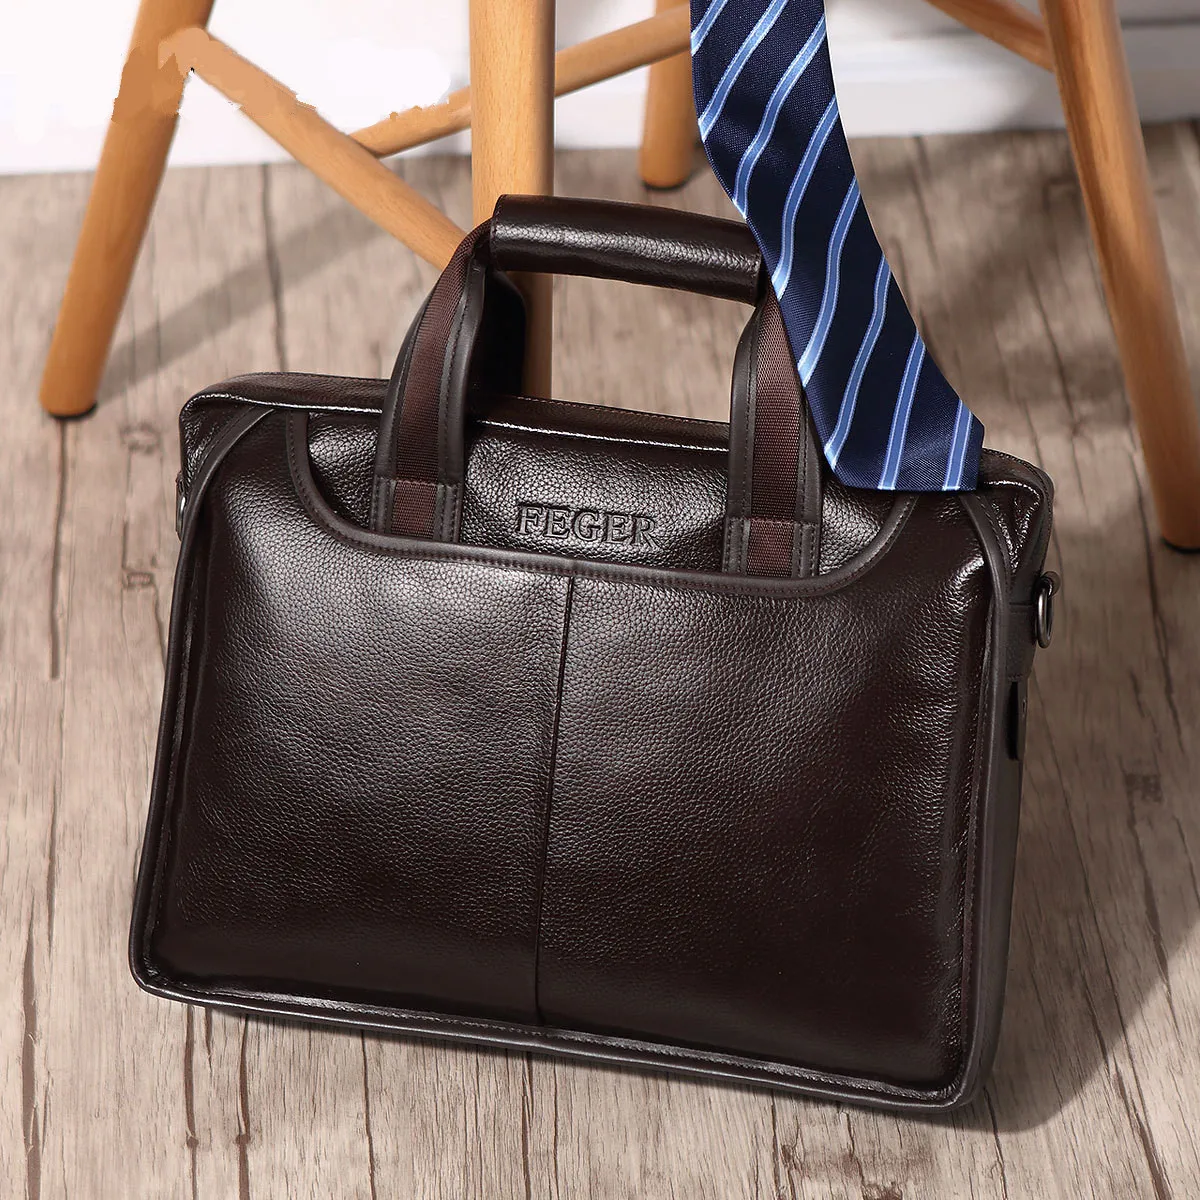 2022 New Fashion Genuine Leather Men Bag Famous Brand Shoulder Bag Messenger Bags Causal Handbag Laptop Briefcase Male